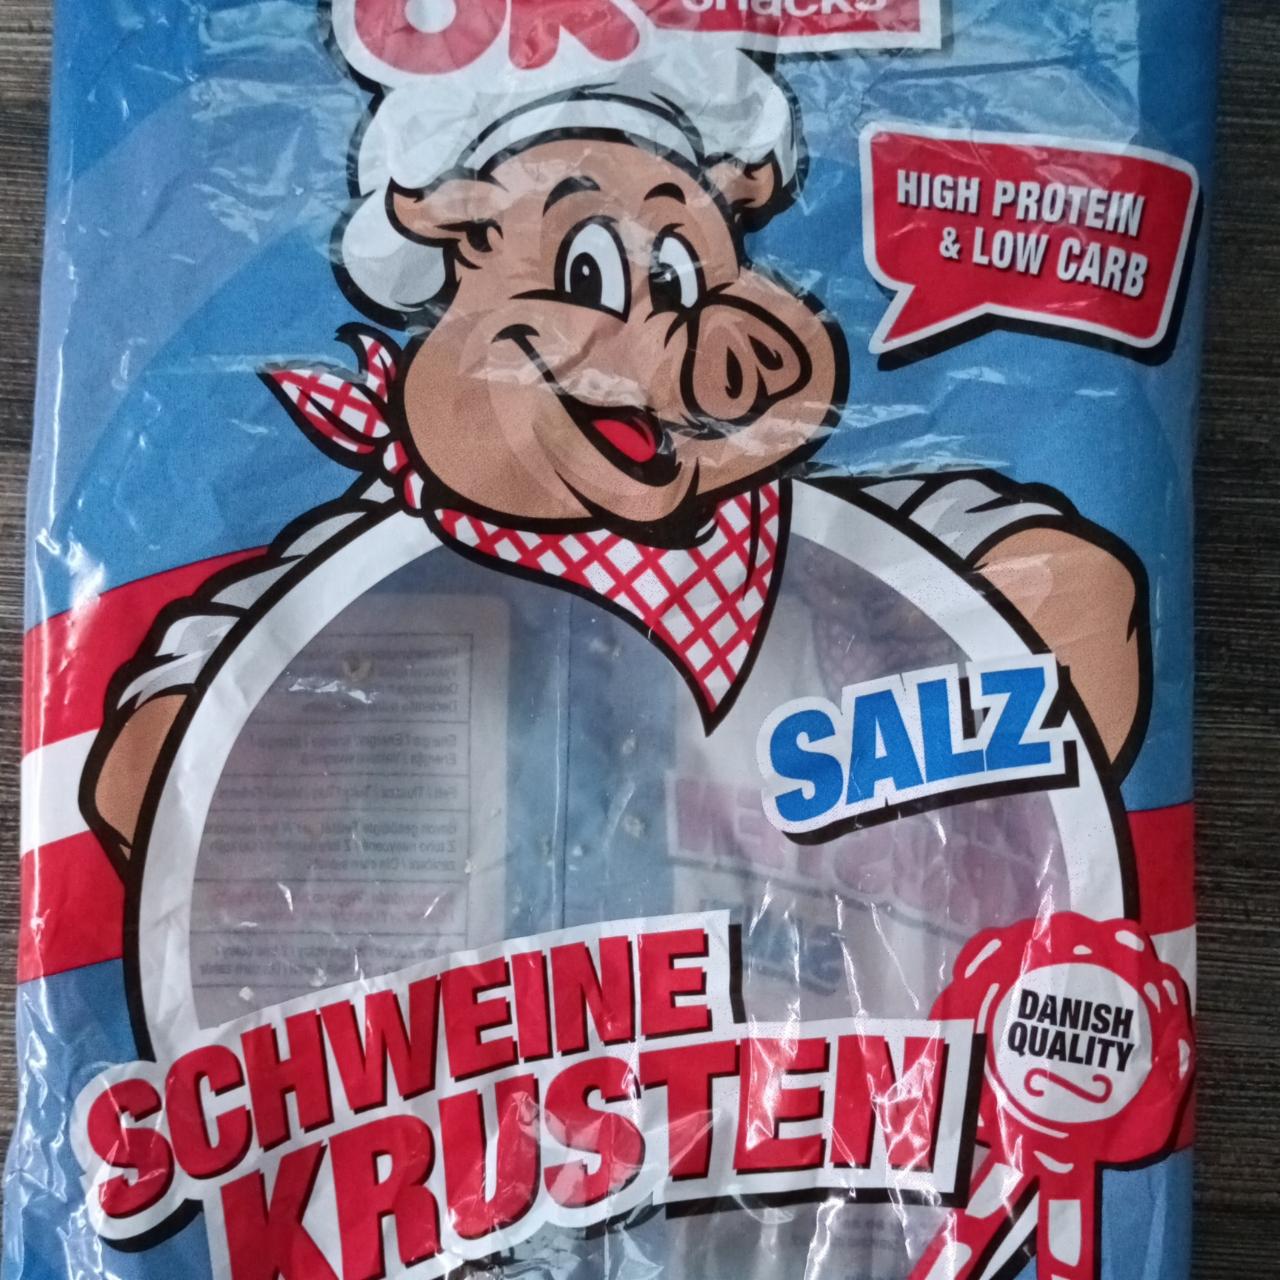 Fotografie - Schweine Krusten Salz OK Snacks